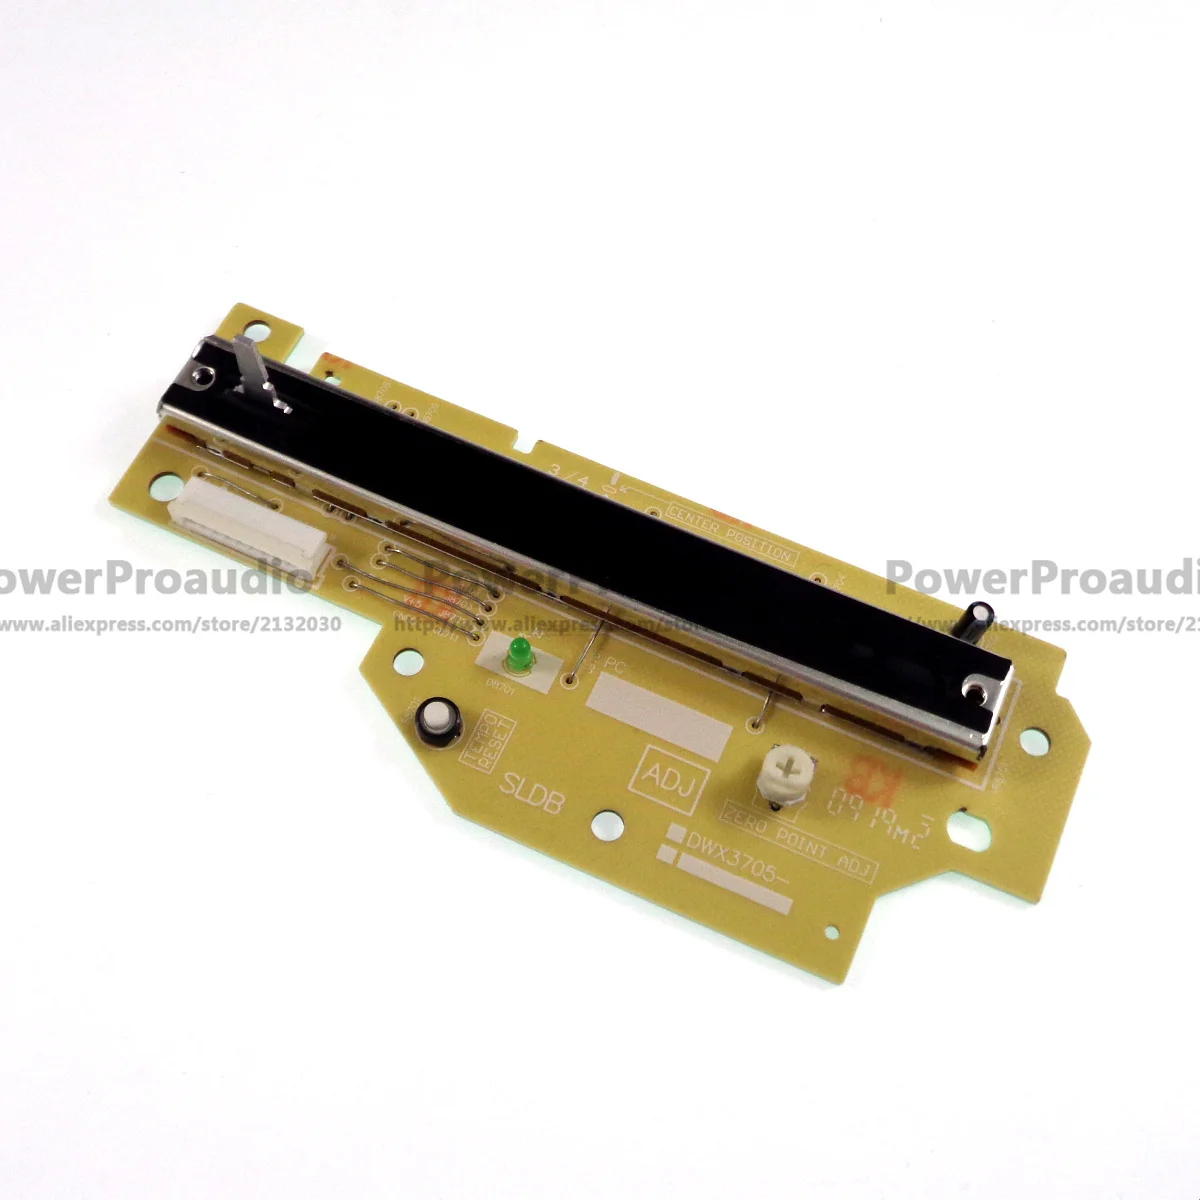 DWX3705 Pitch Tempo fader circuit board for Pioneer CDJ-2000NXS2 CDJ-TOUR1 SLDB yellow Board